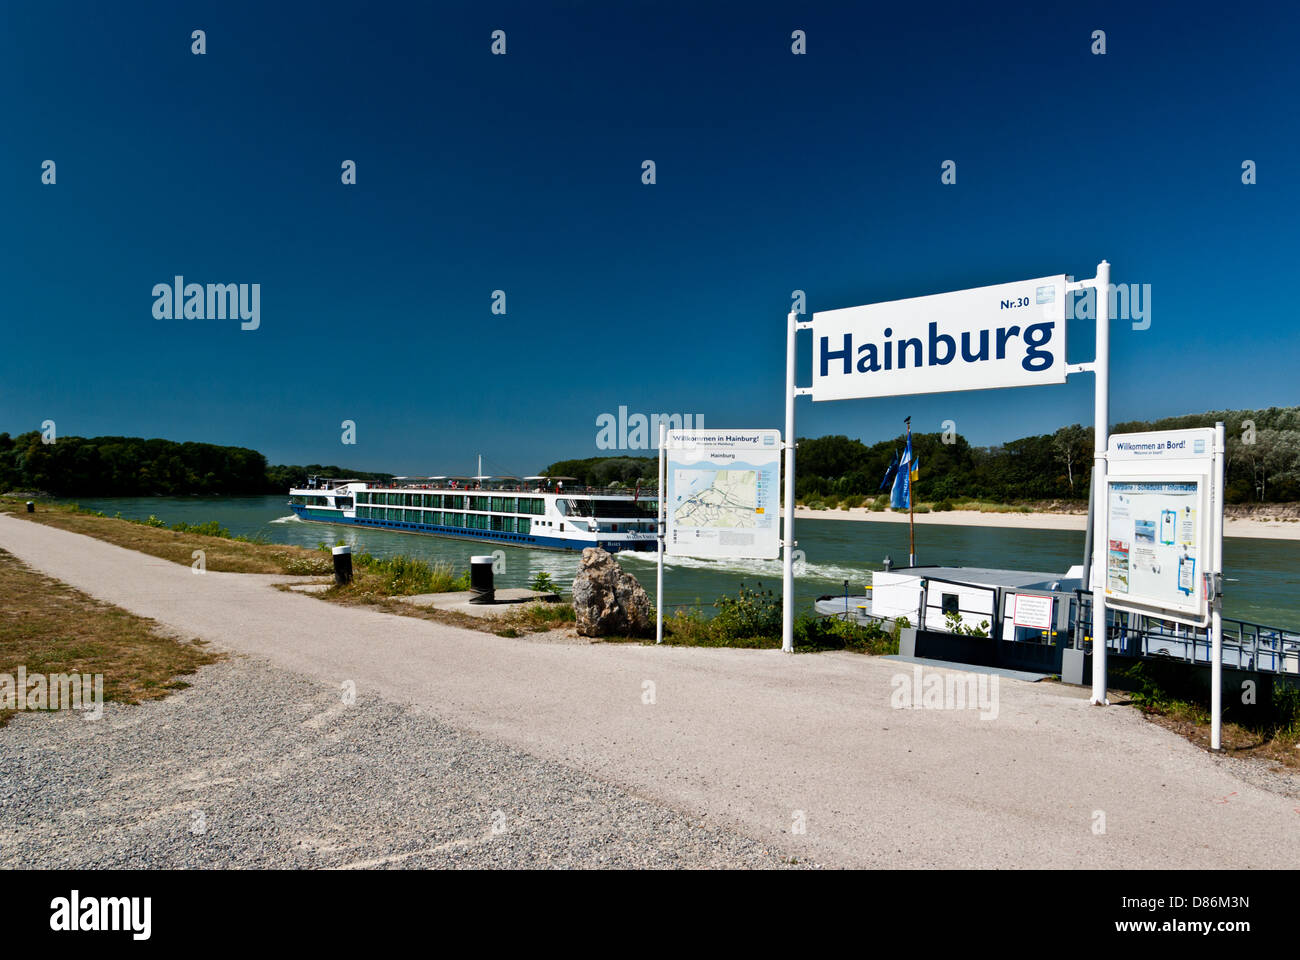 Pier and the boat in Hainburg an der Donau, Austria Stock Photo